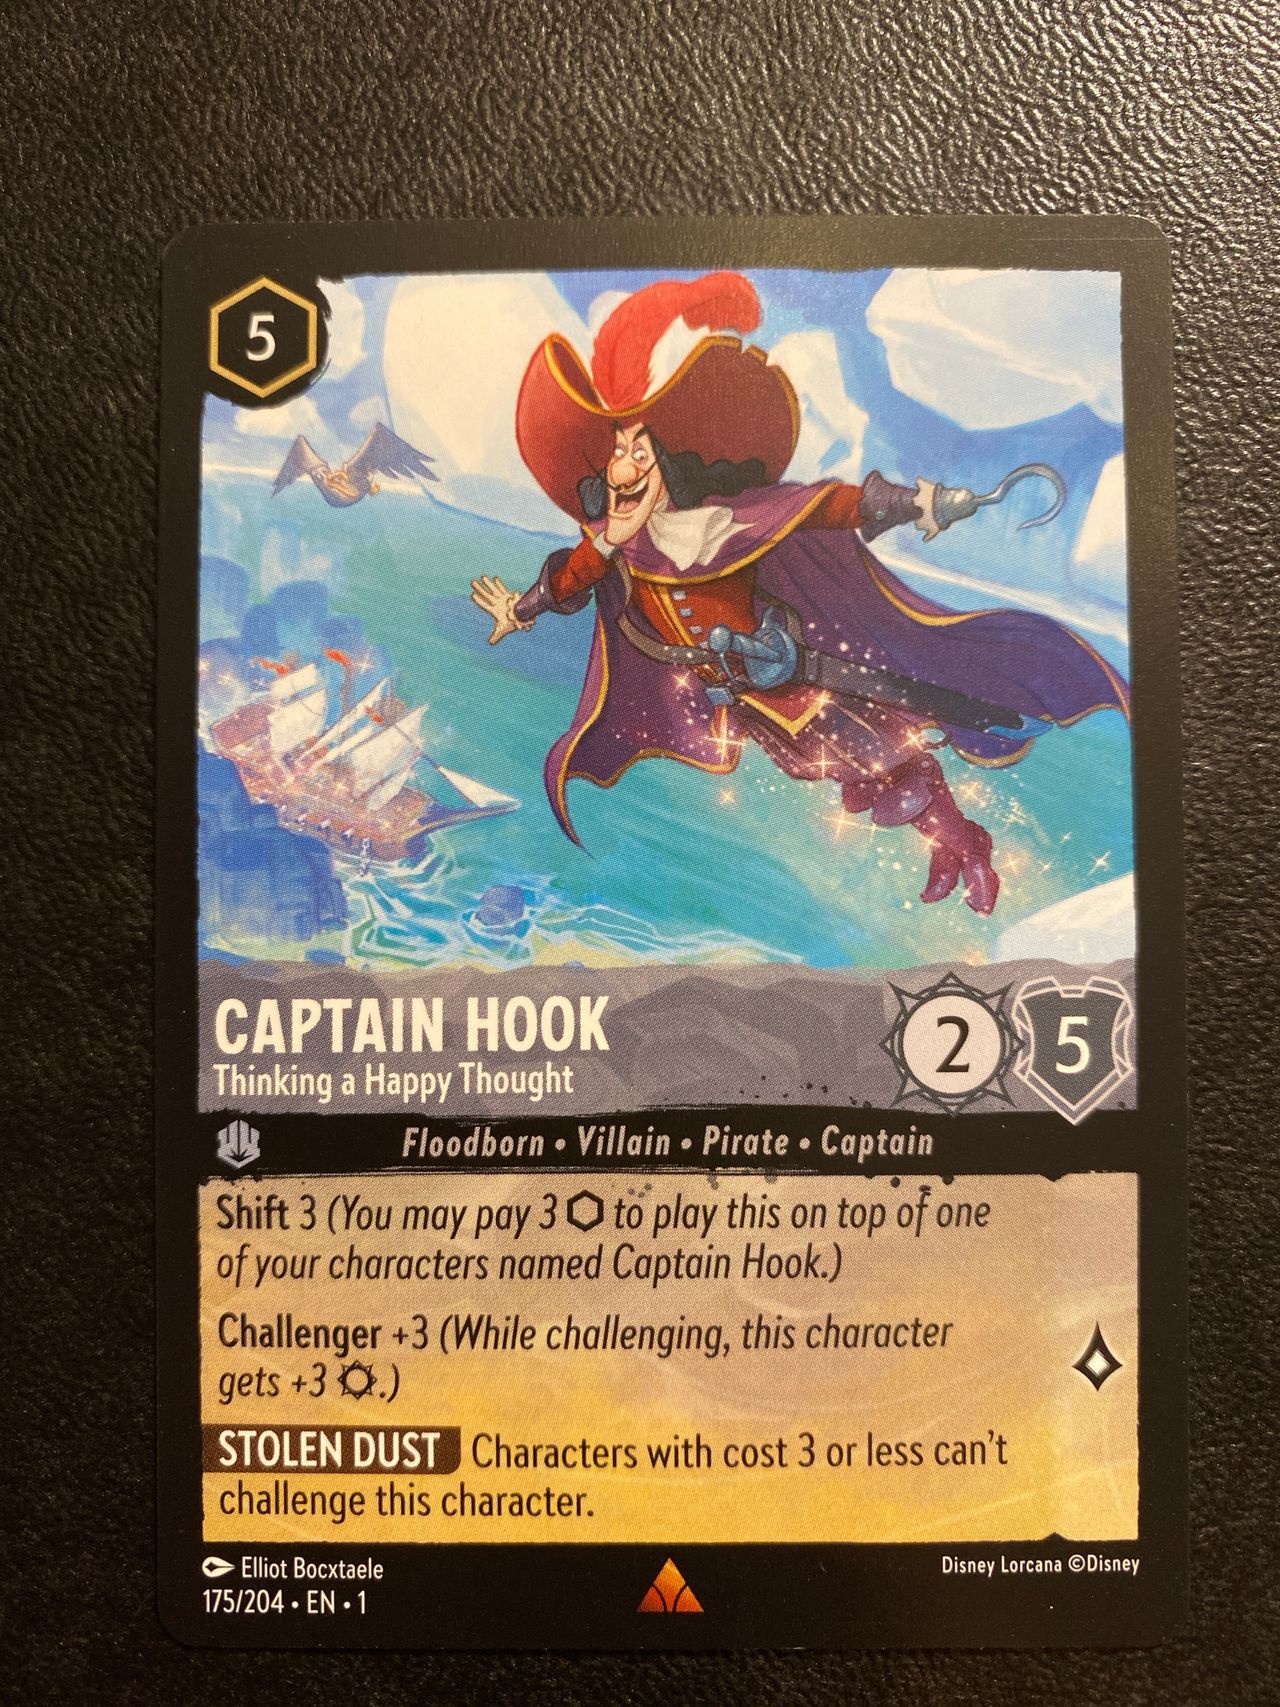 Captain Hook rare Disney Lorcana samlekort